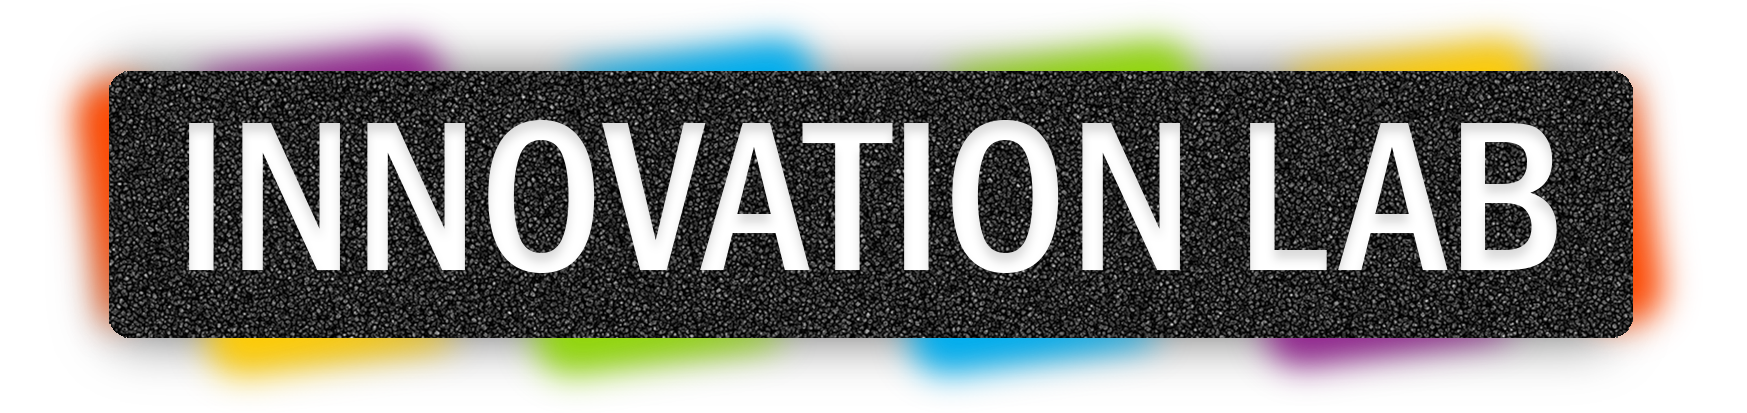 Innovation Lab logo graphic